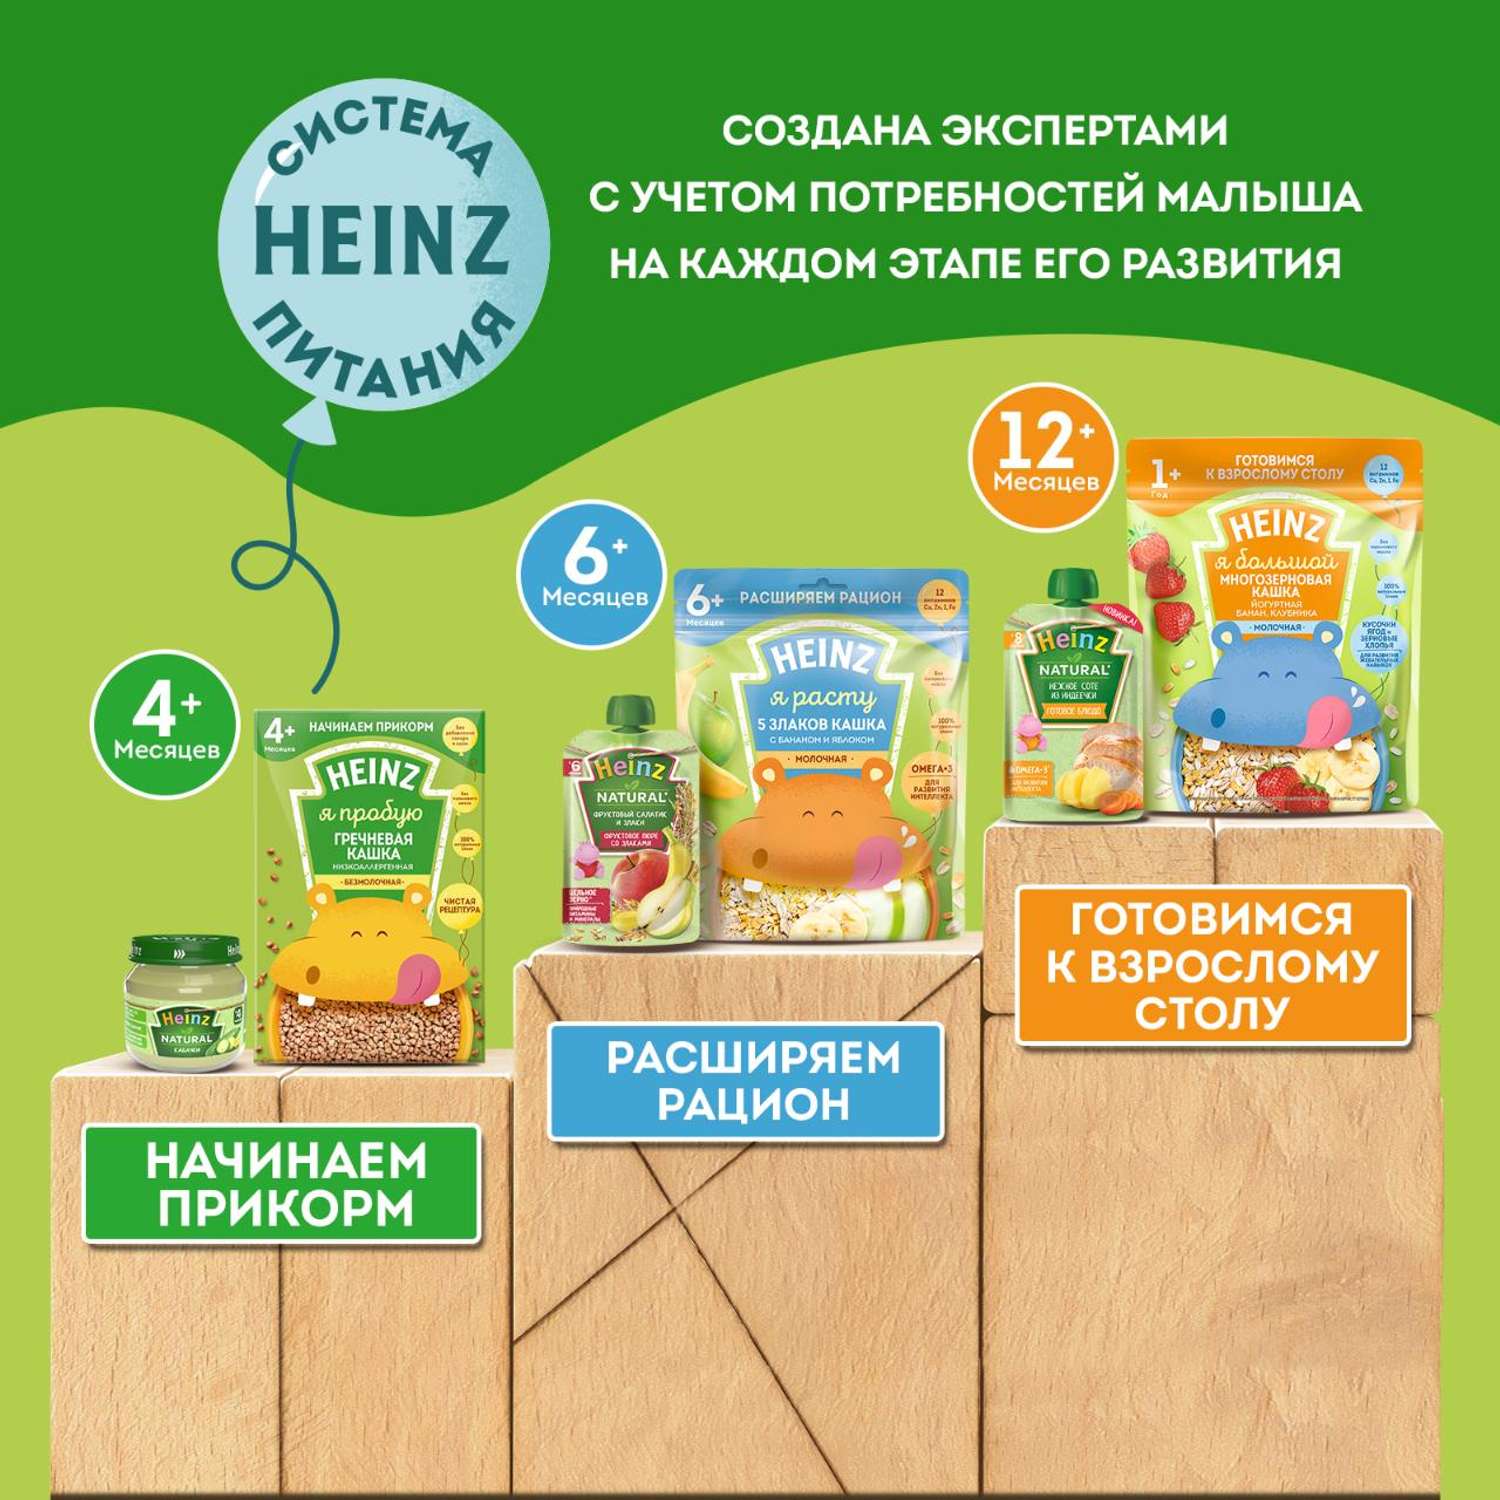 Низкоаллергенная гречневая кашка Heinz (4+ мес.), г